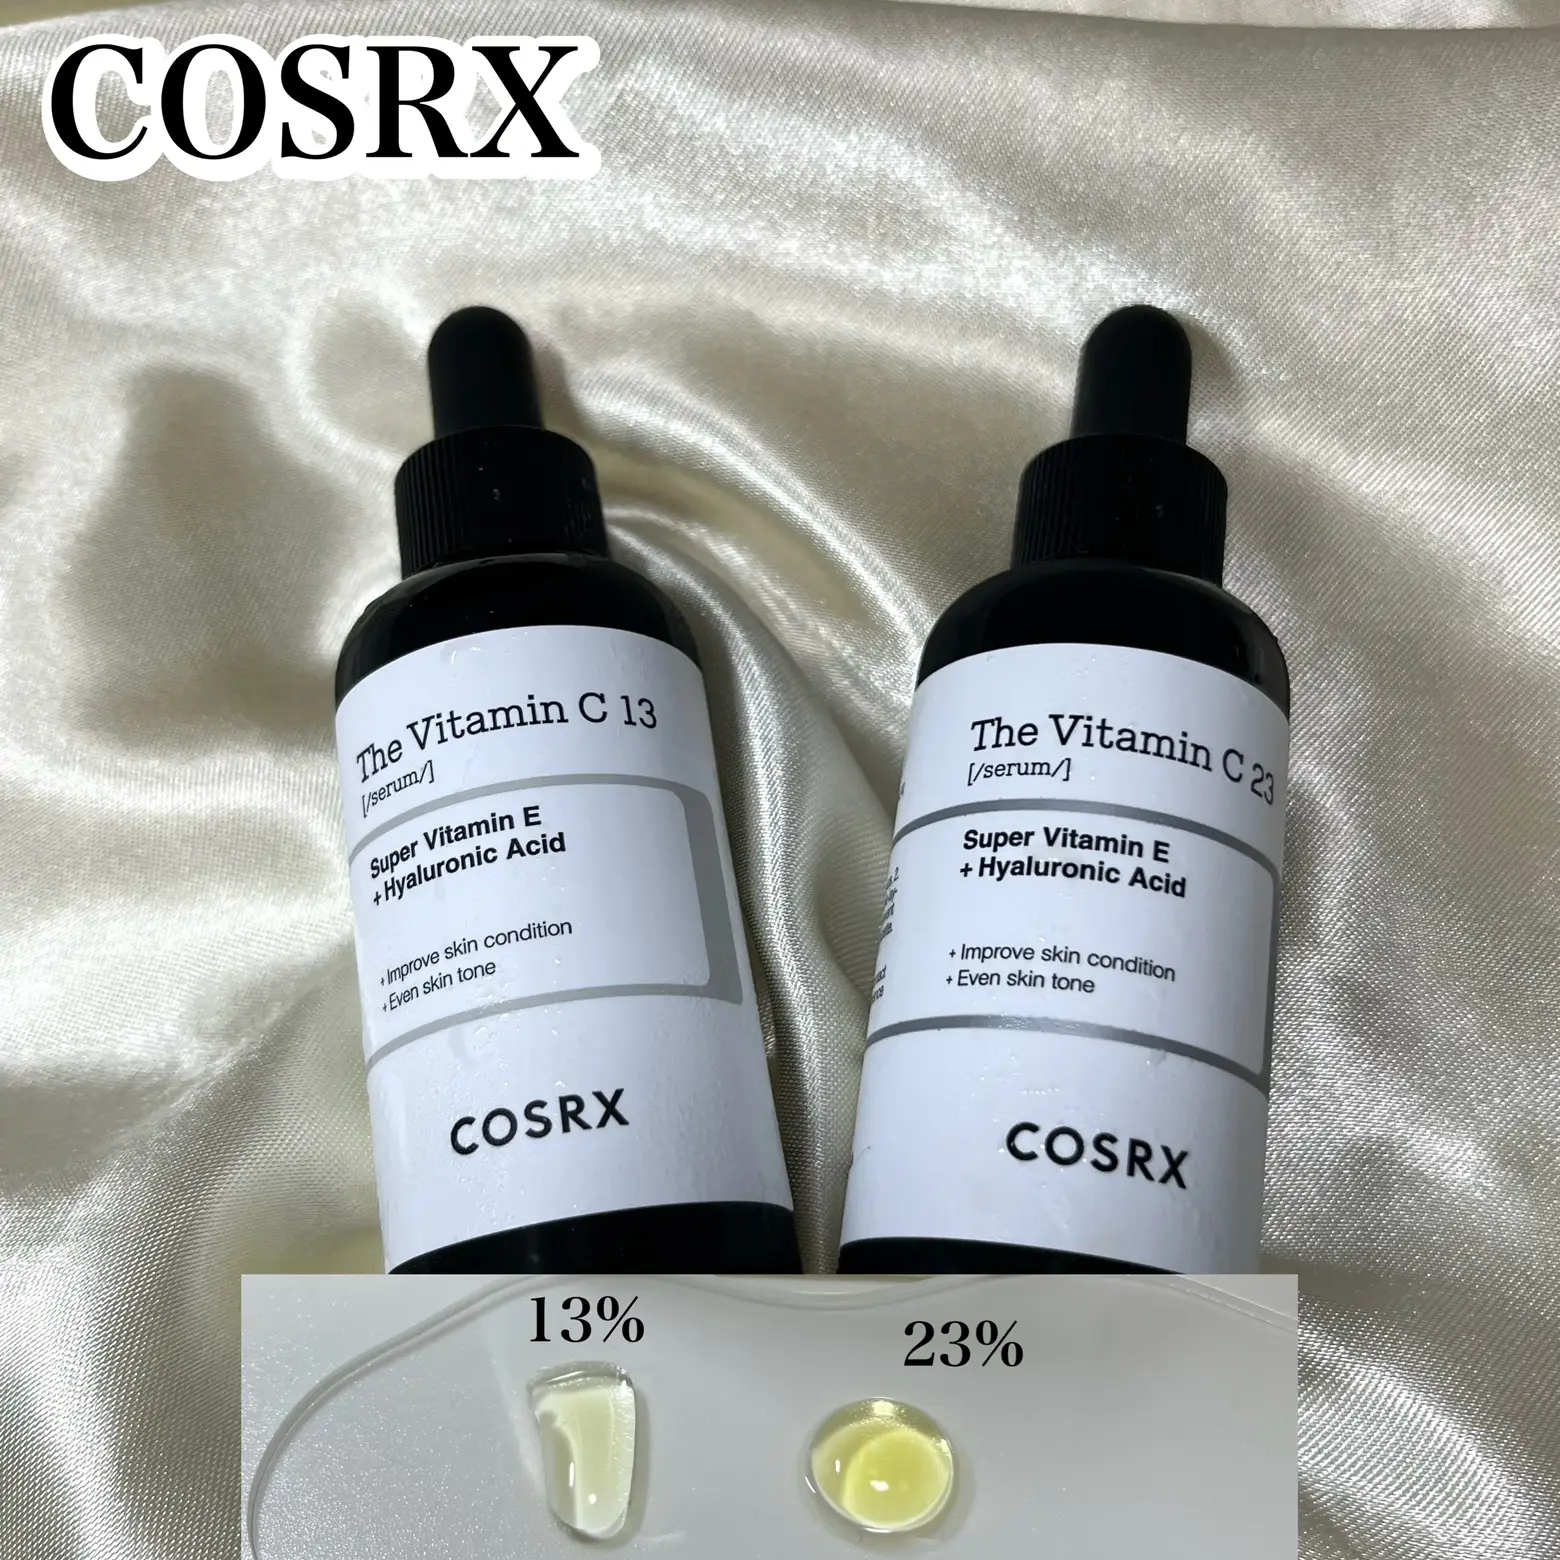 COSRX 大人気ビタミンC美容液比較レビュー‼️ | ちずる🌸が投稿した